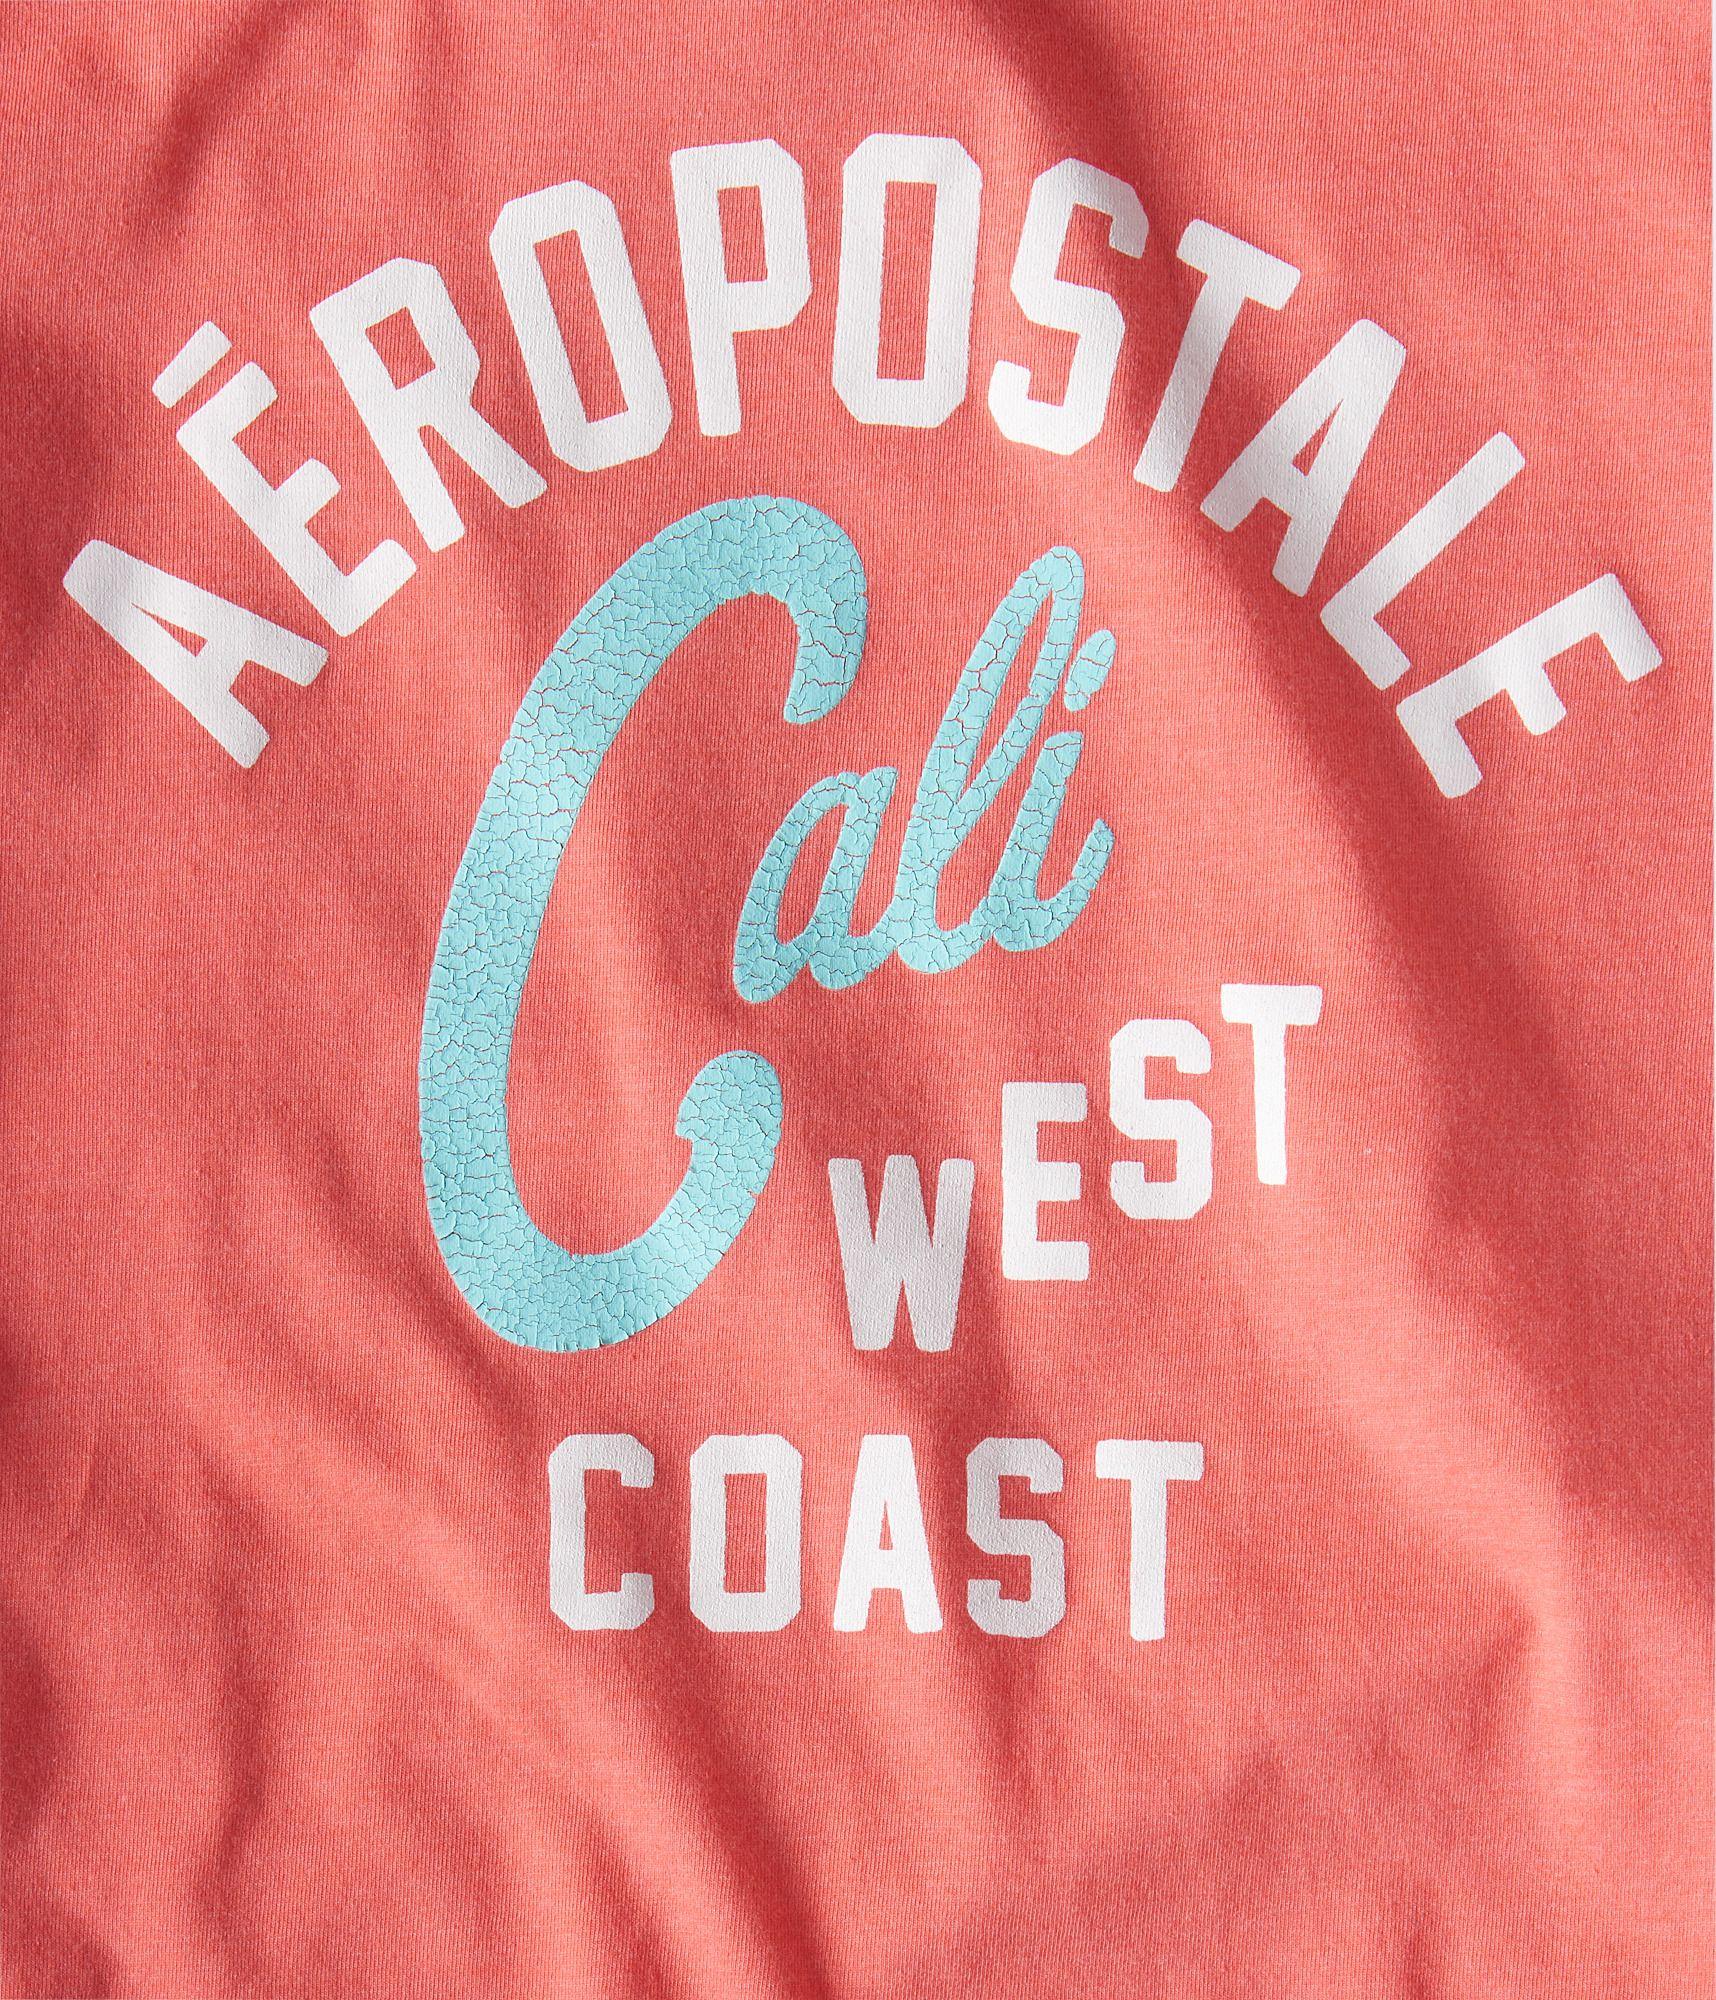 Areopostle Logo - Details about aeropostale mens aeropostale west coast logo graphic tee